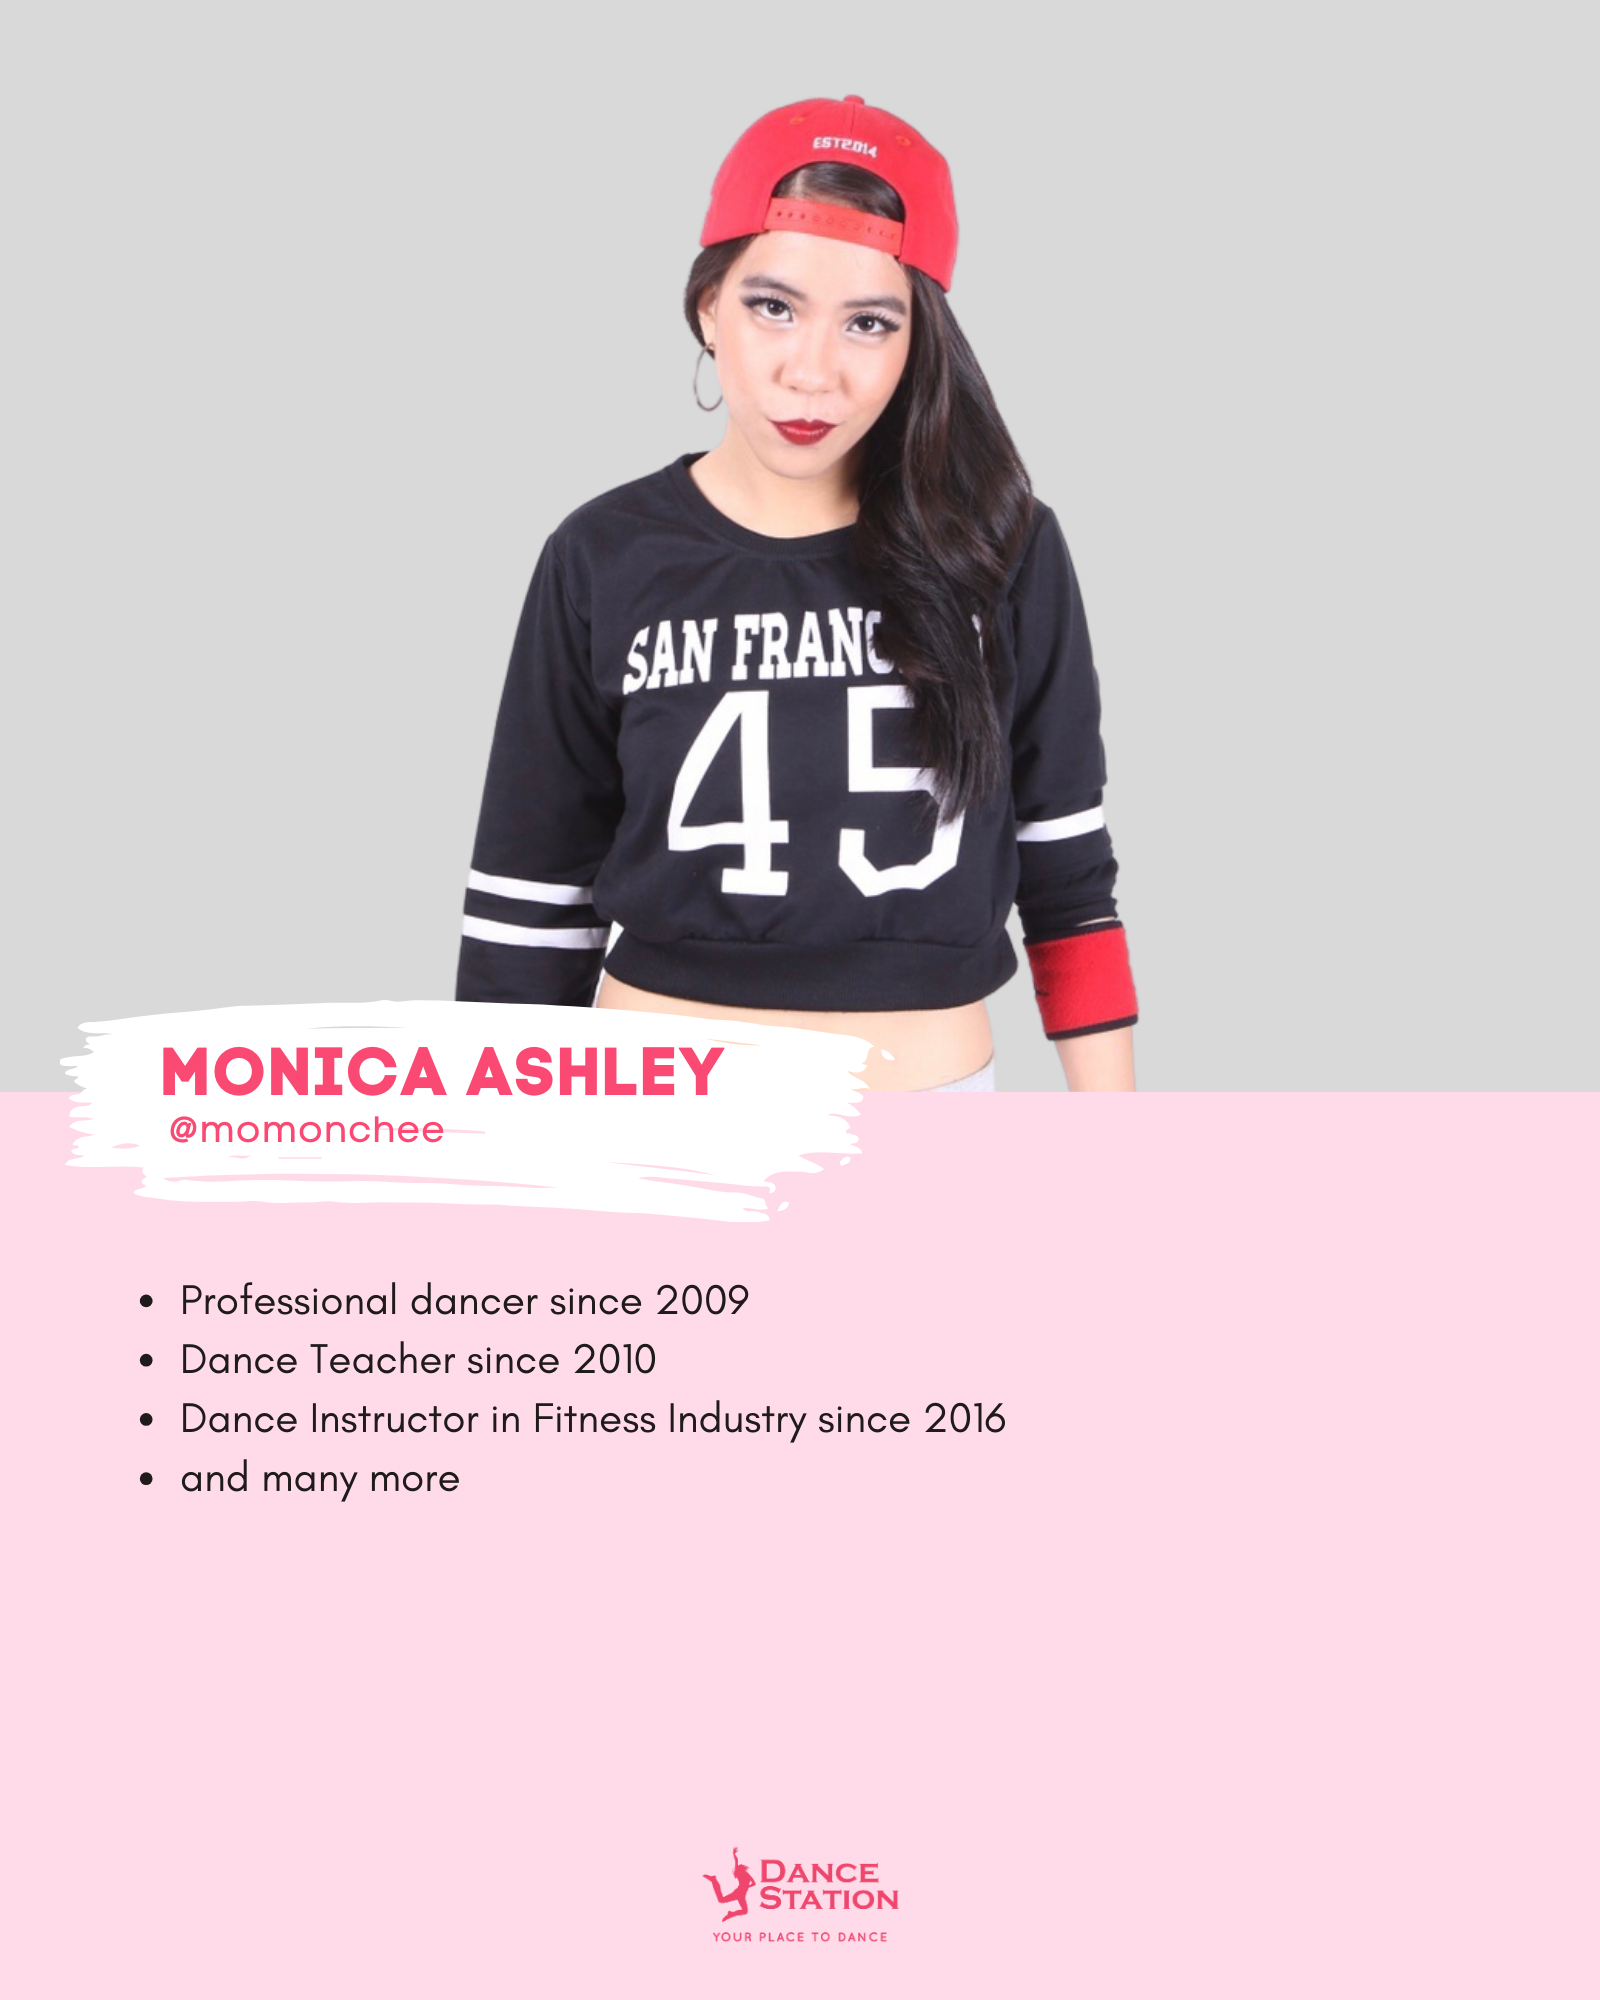 MONICA ASHLEY (MS. Monche)